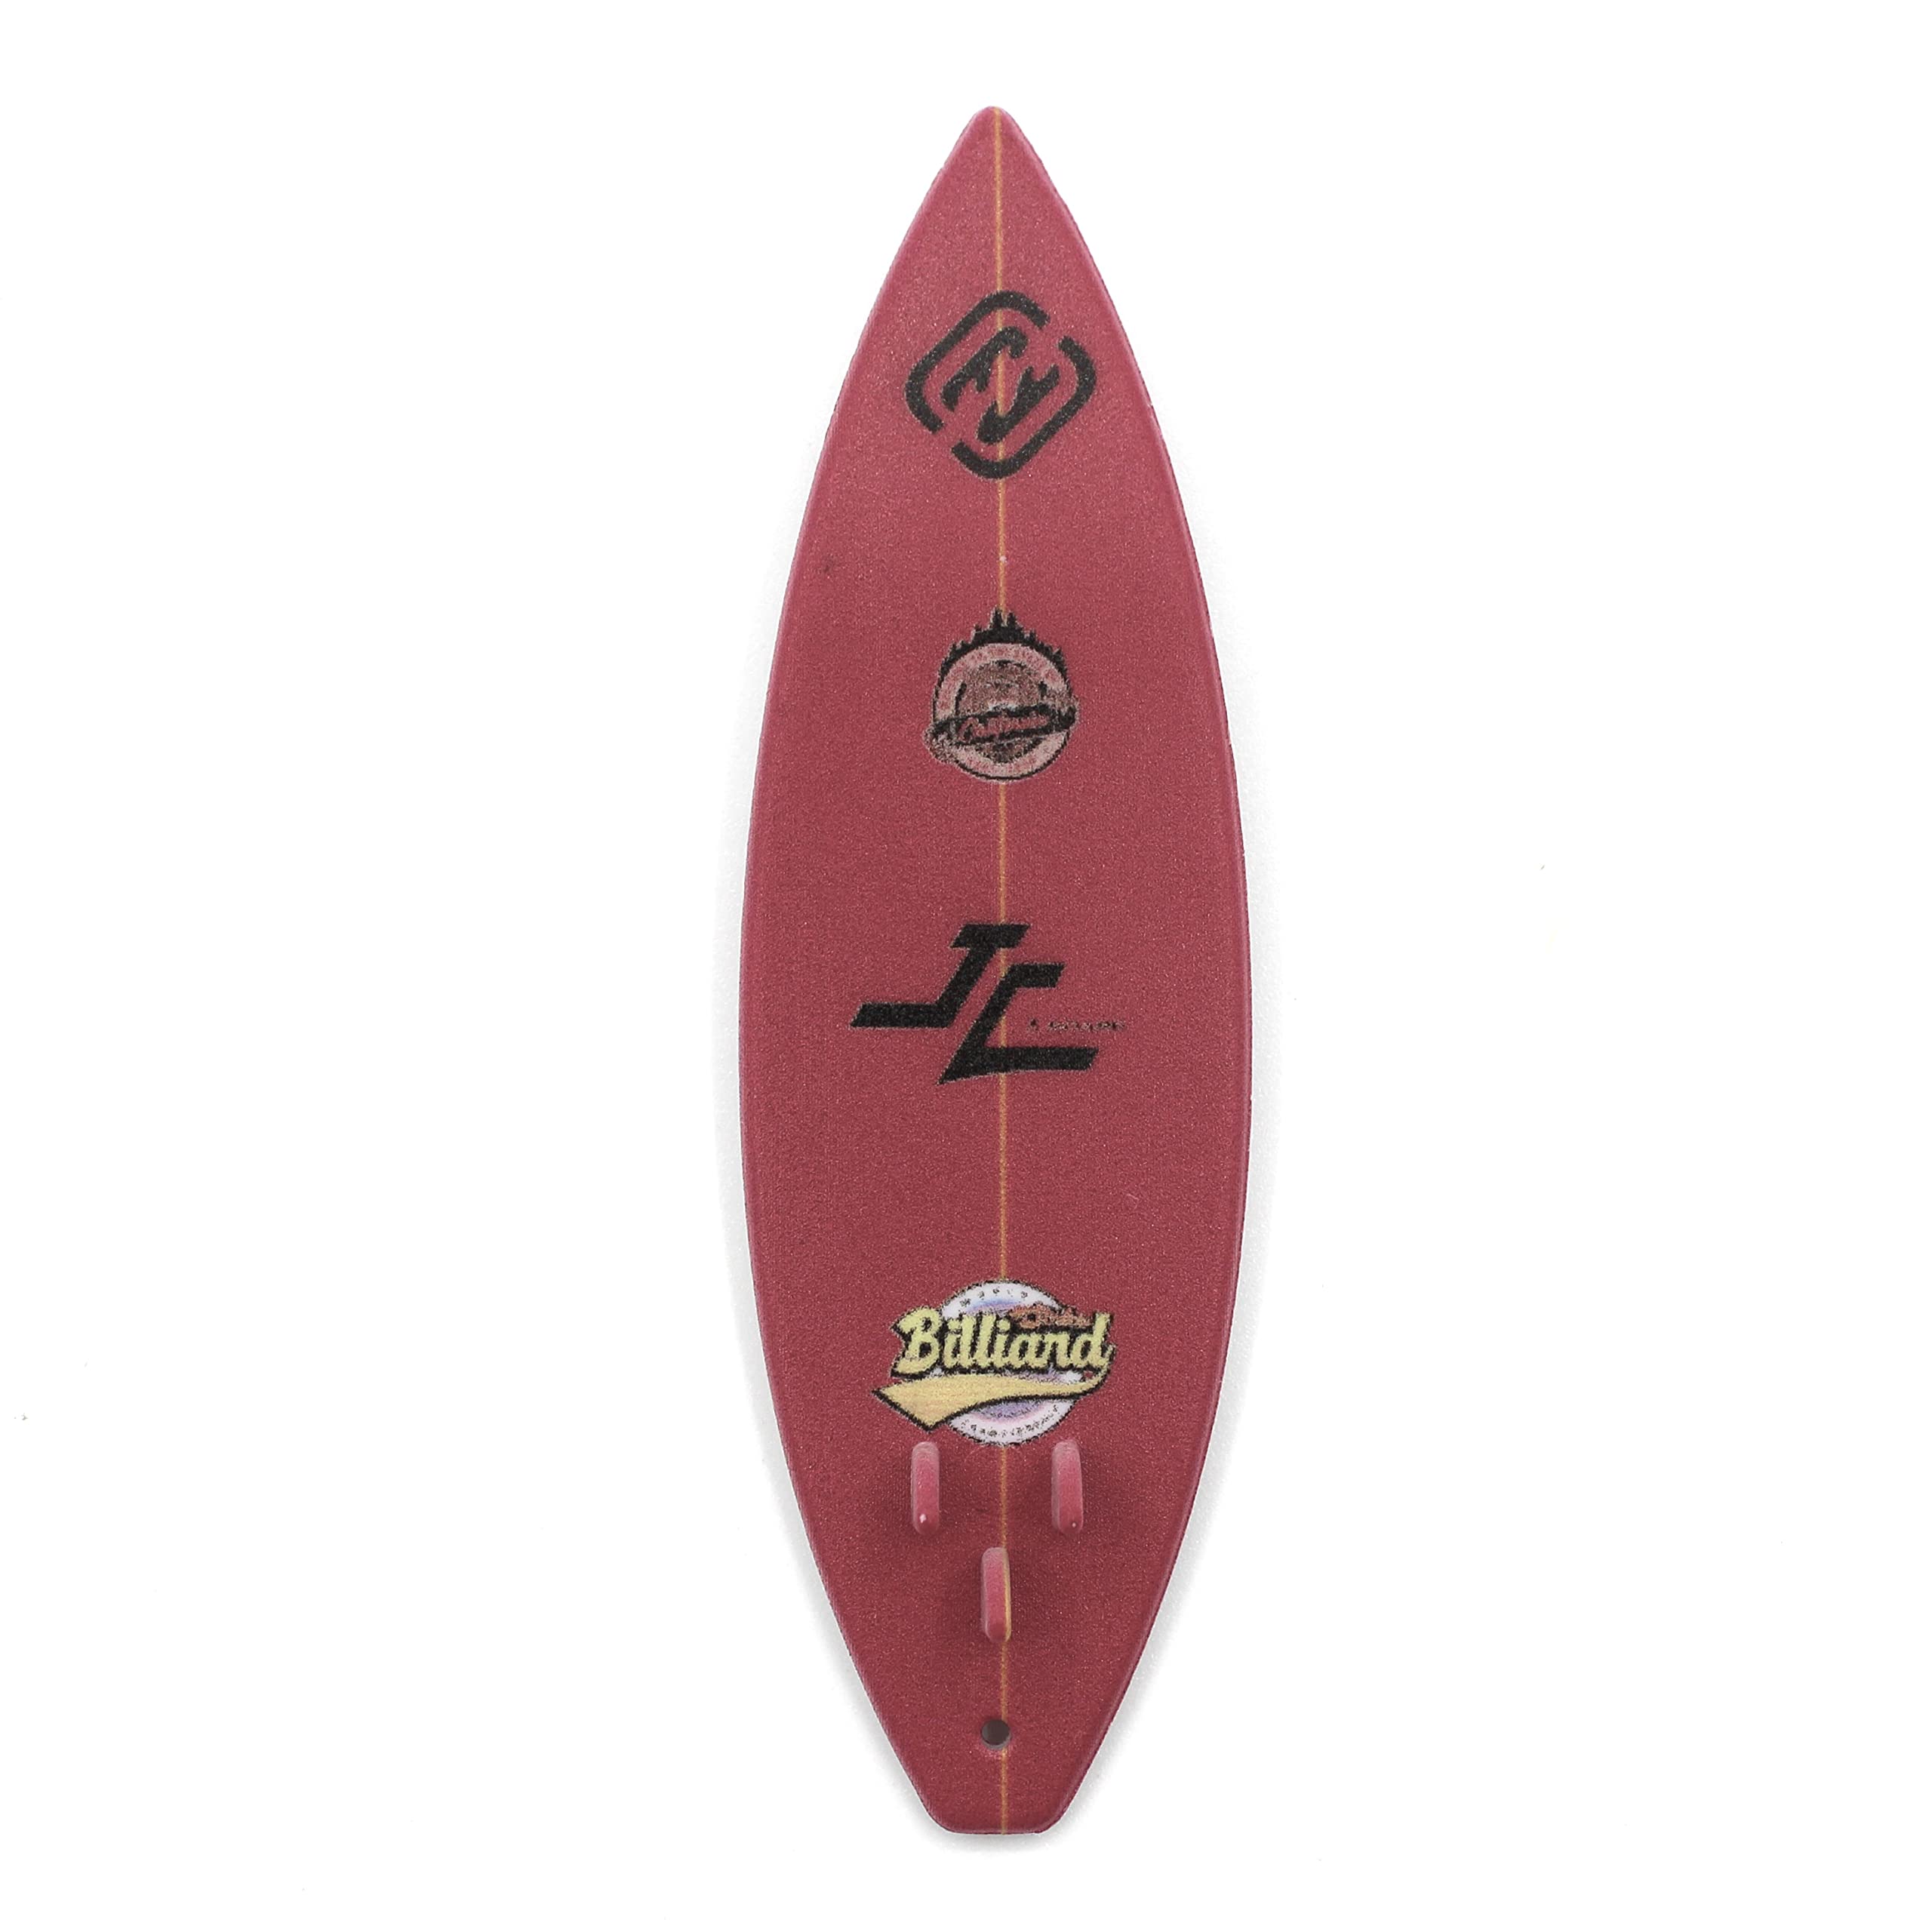 MAOERYAN Finger Surfboard/Rad Fingerboard Toy/Surf The Wind/Mini Board for Kids and Surfers Hone Surfer Skills